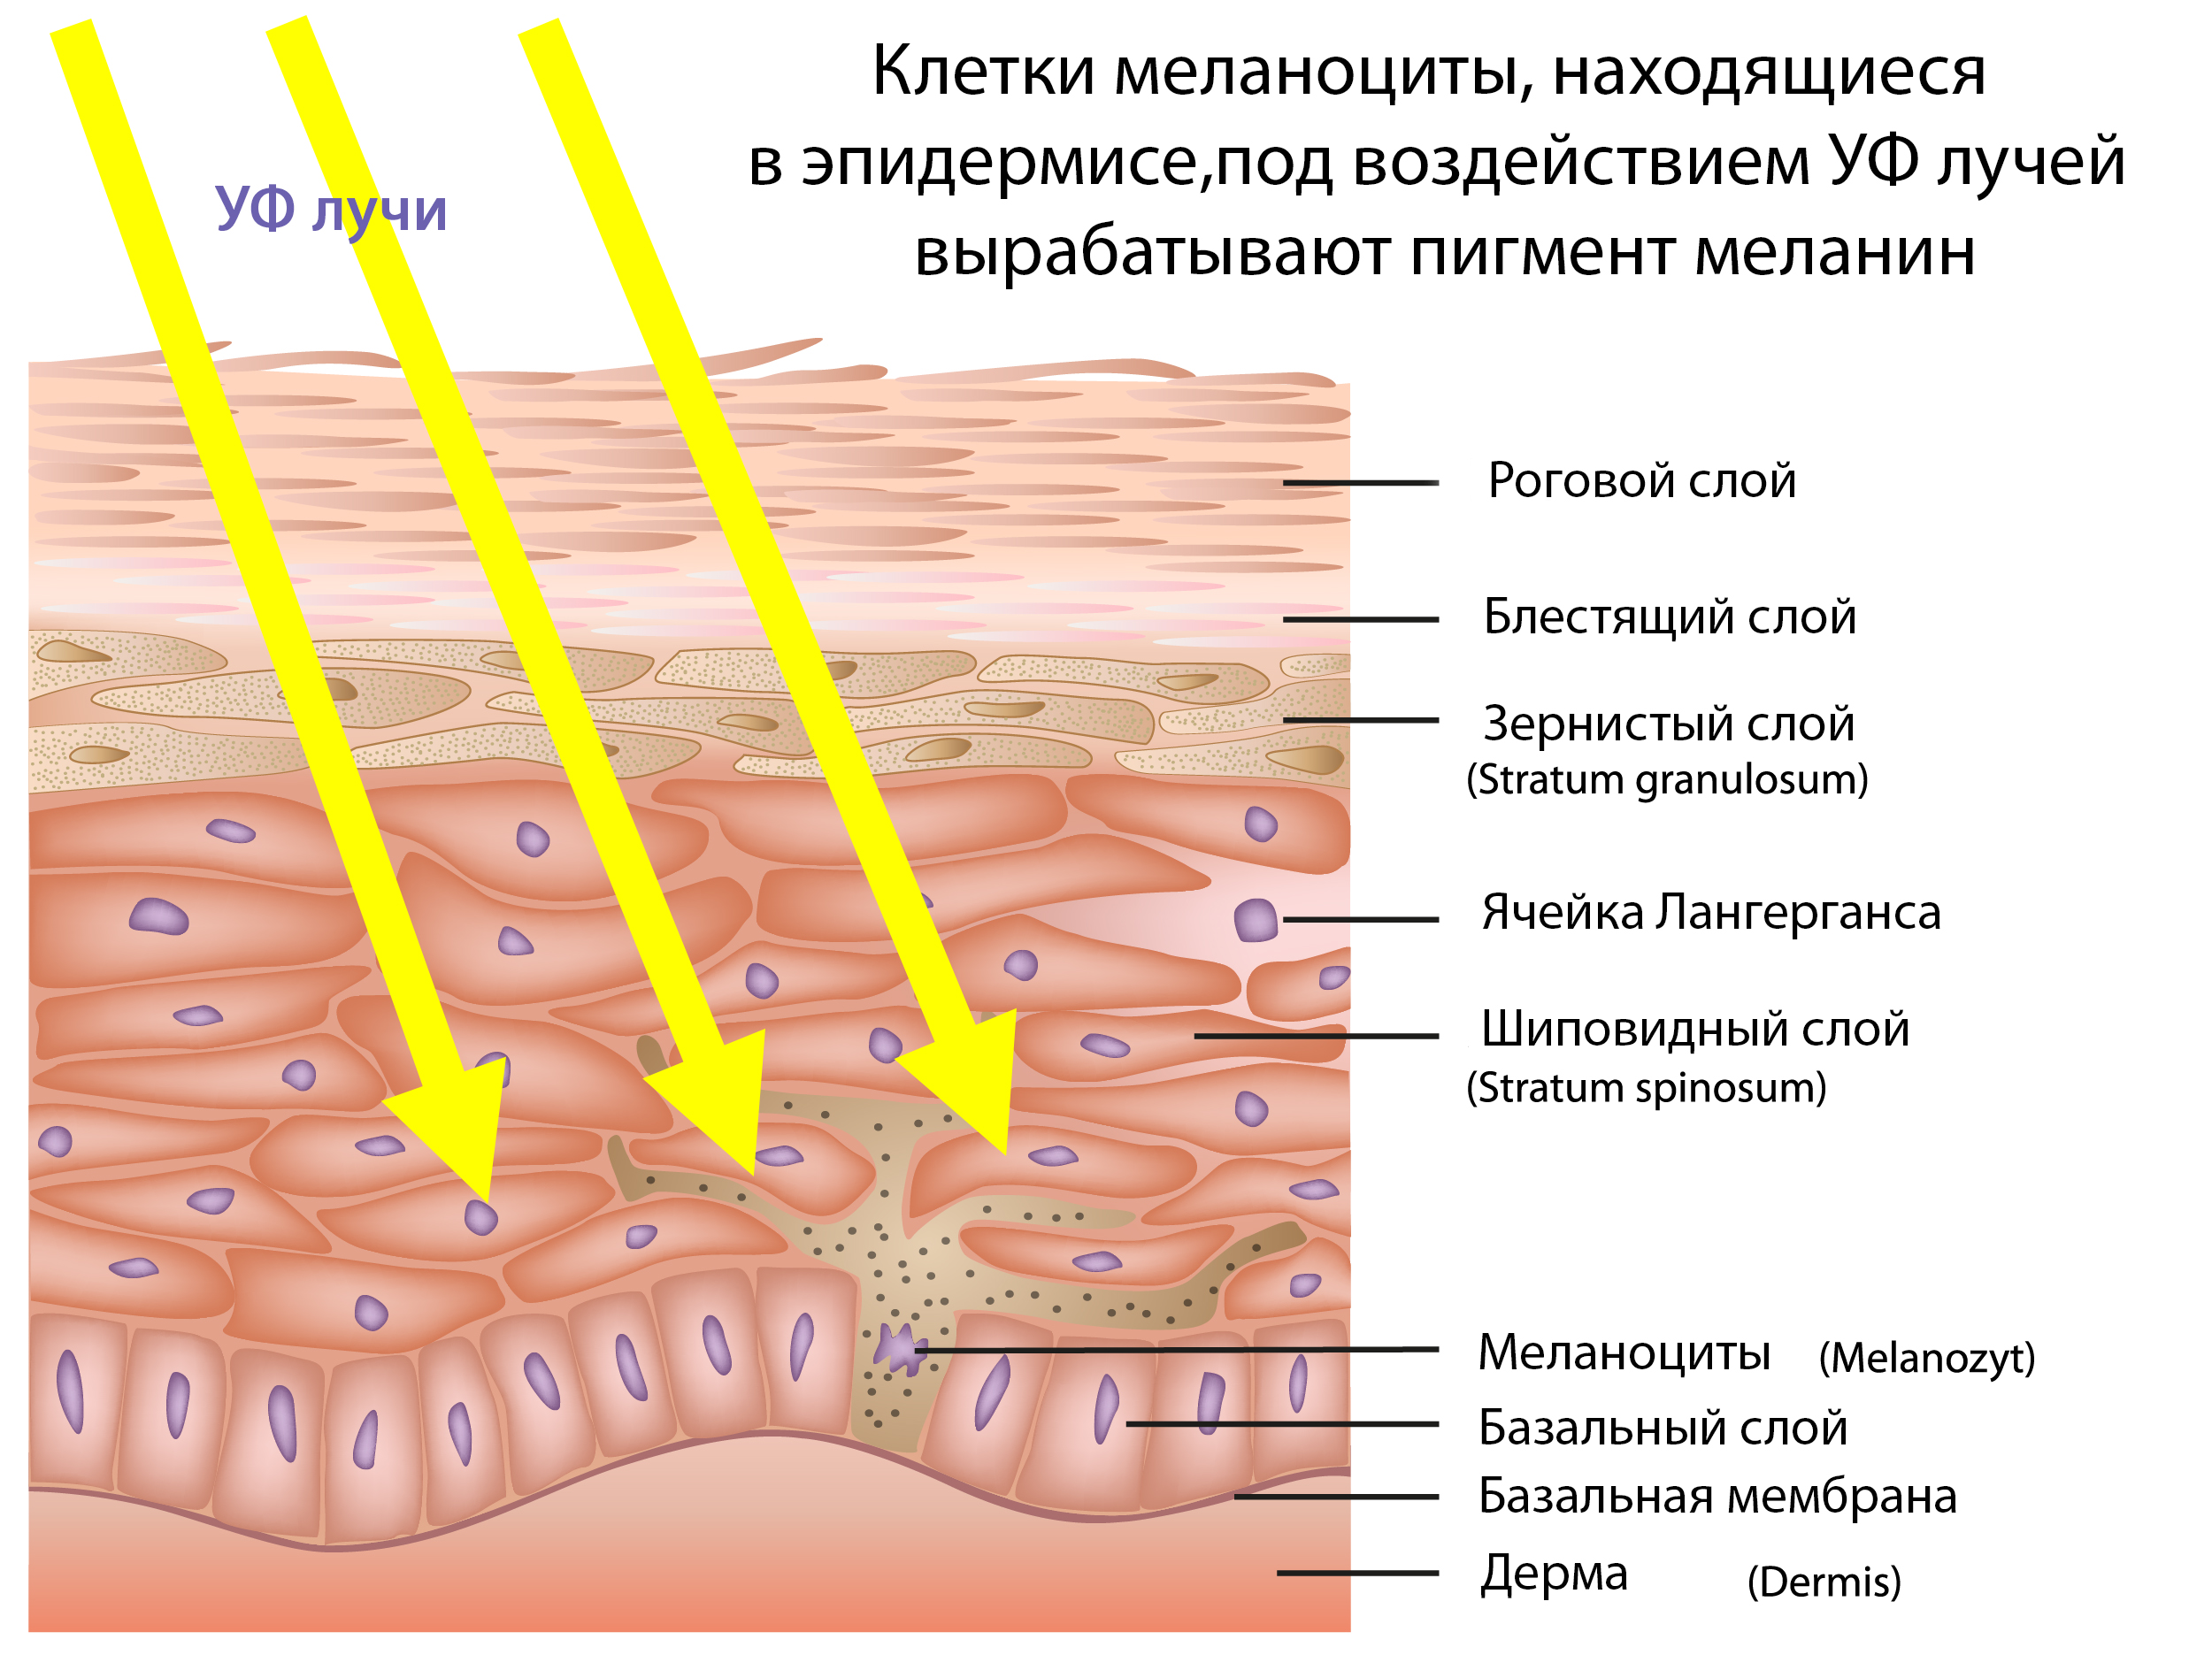 Клетки меланоциты вырабатывают пигмент меланин